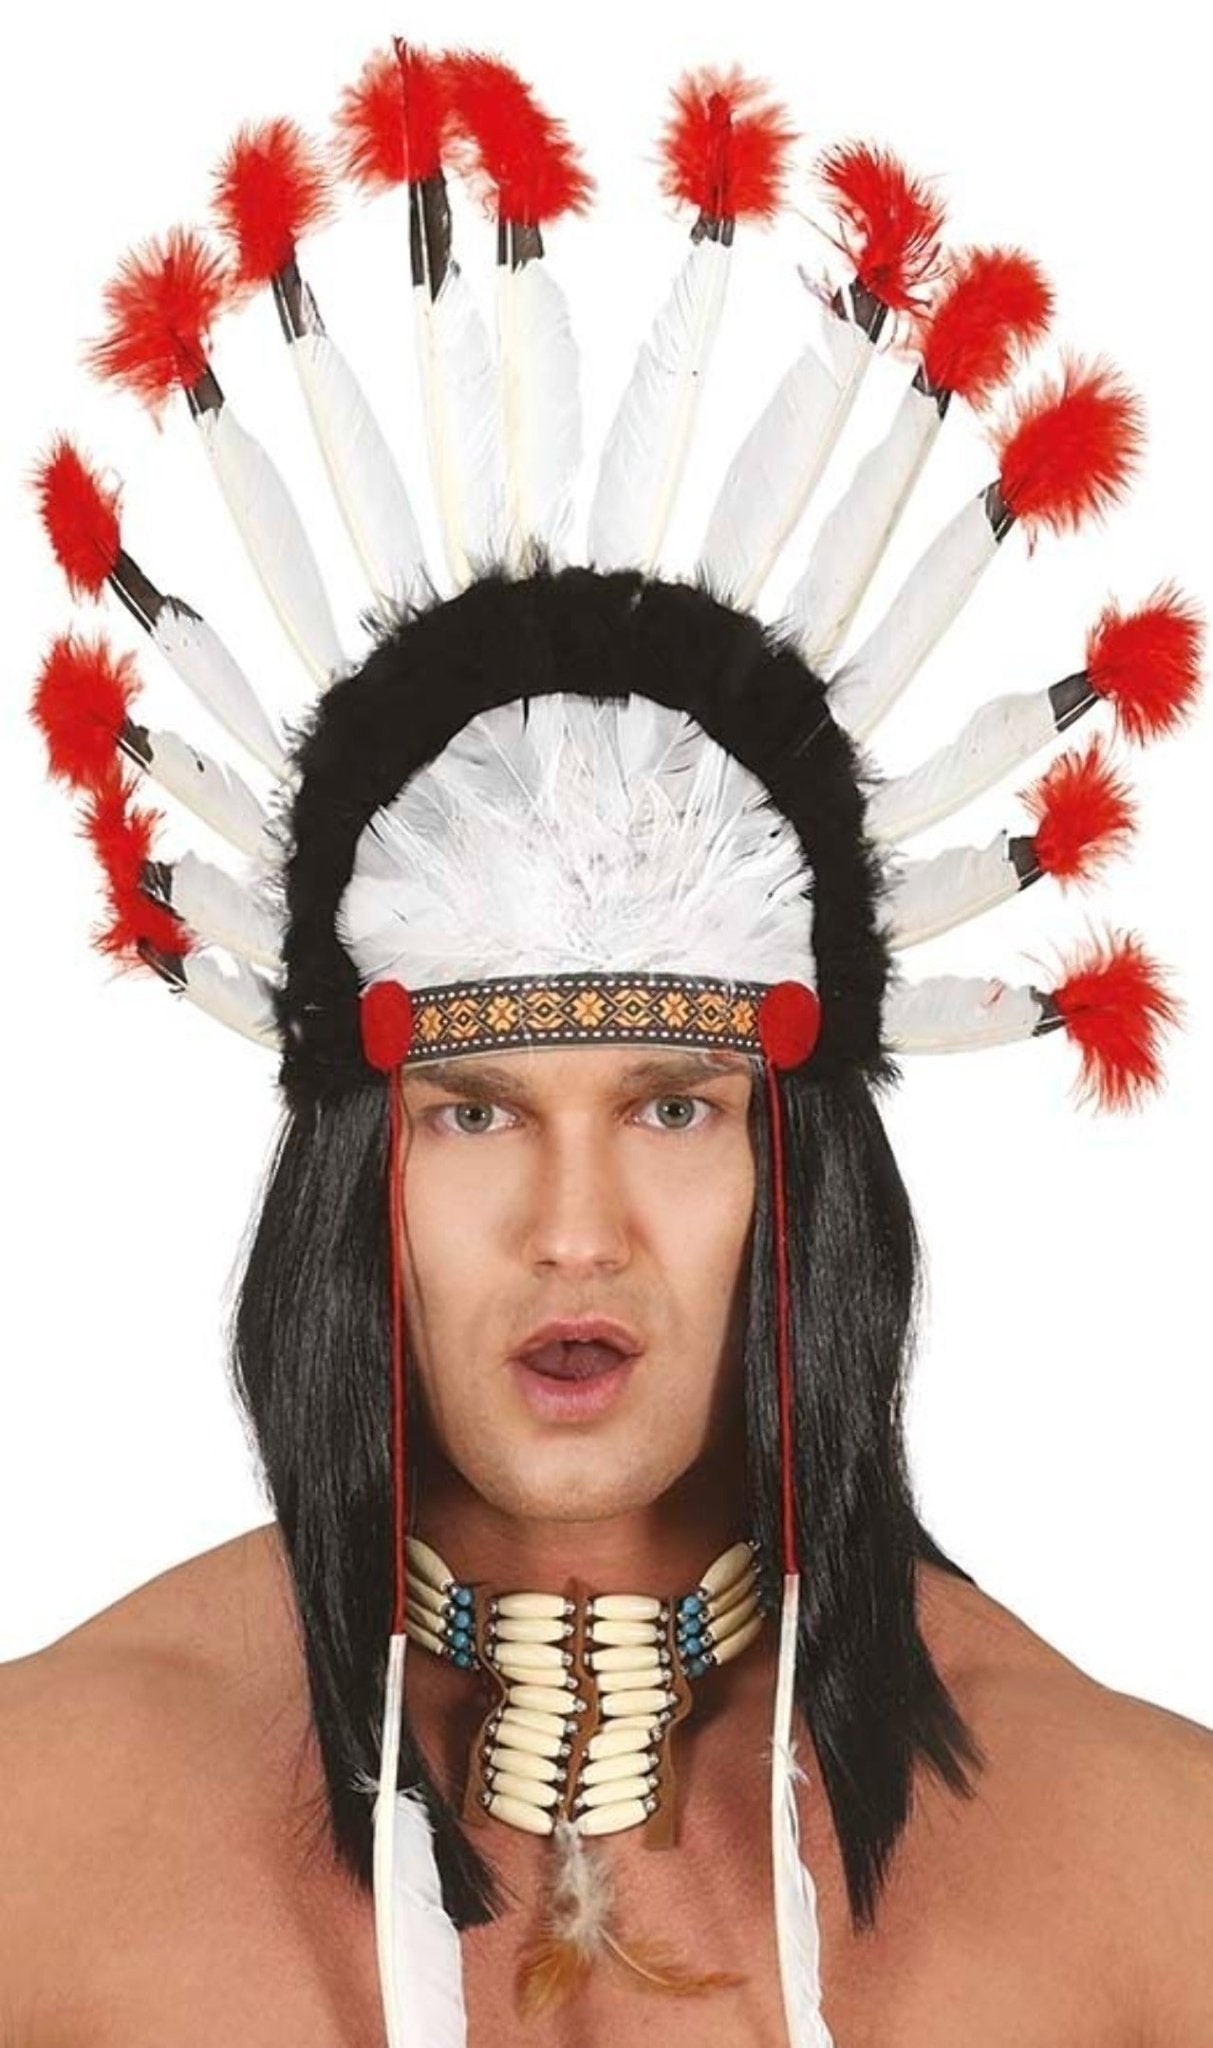 Apache-Indianer-Kopfschmuck